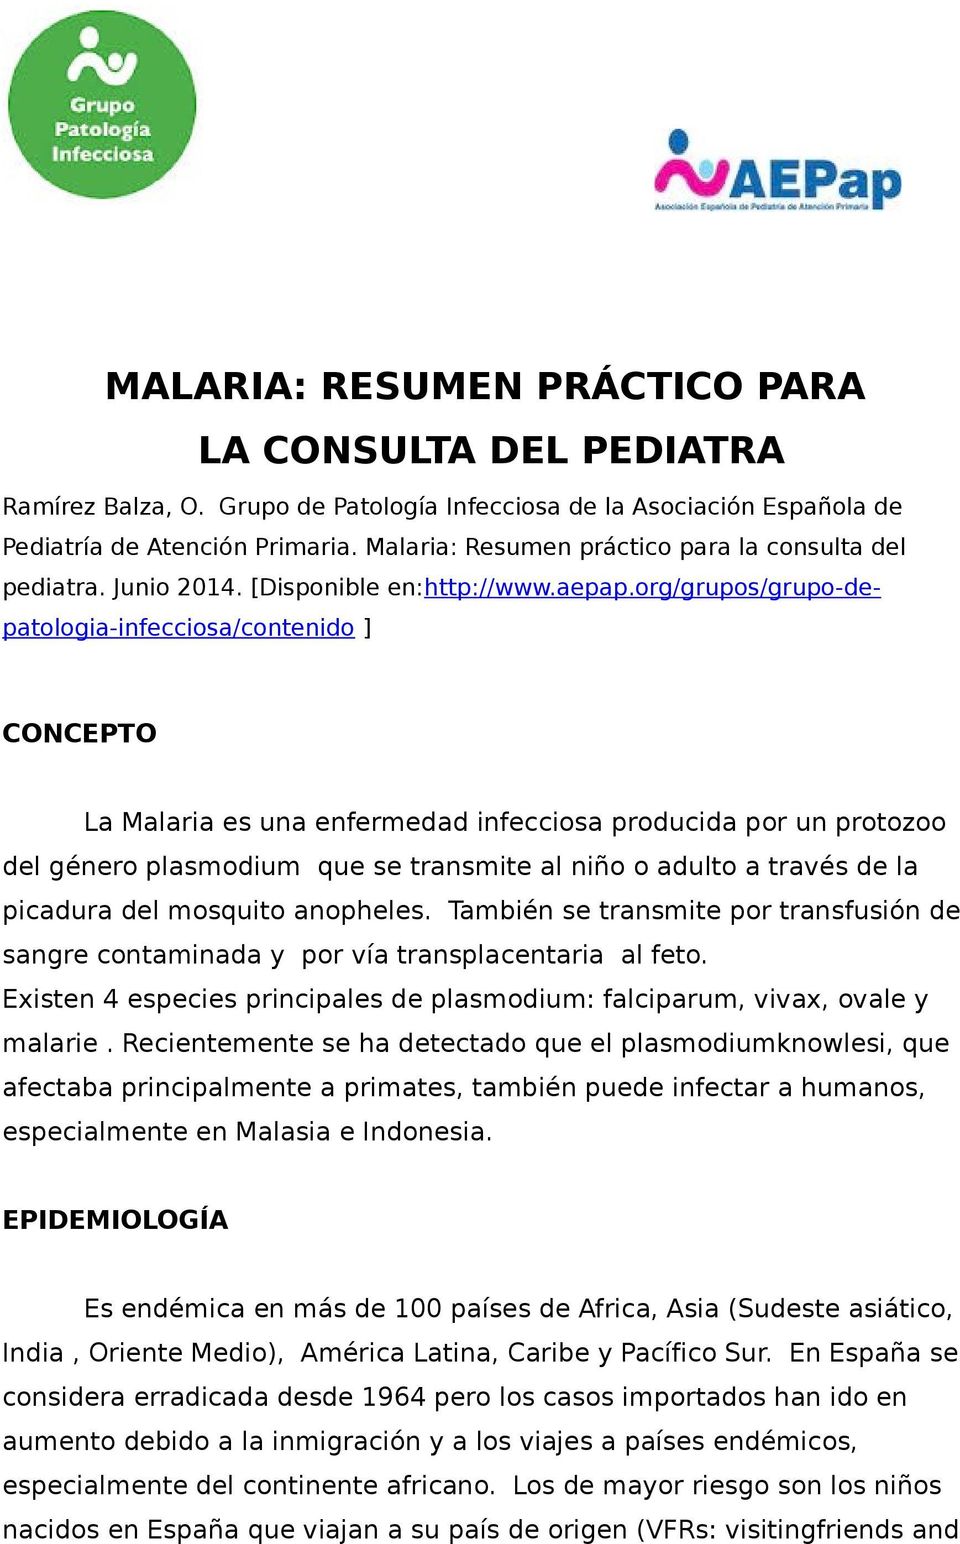 rg/grups/grup-depatlgia-infeccisa/cntenid ] CONCEPTO La Malaria es una enfermedad infeccisa prducida pr un prtz del géner plasmdium que se transmite al niñ adult a través de la picadura del msquit